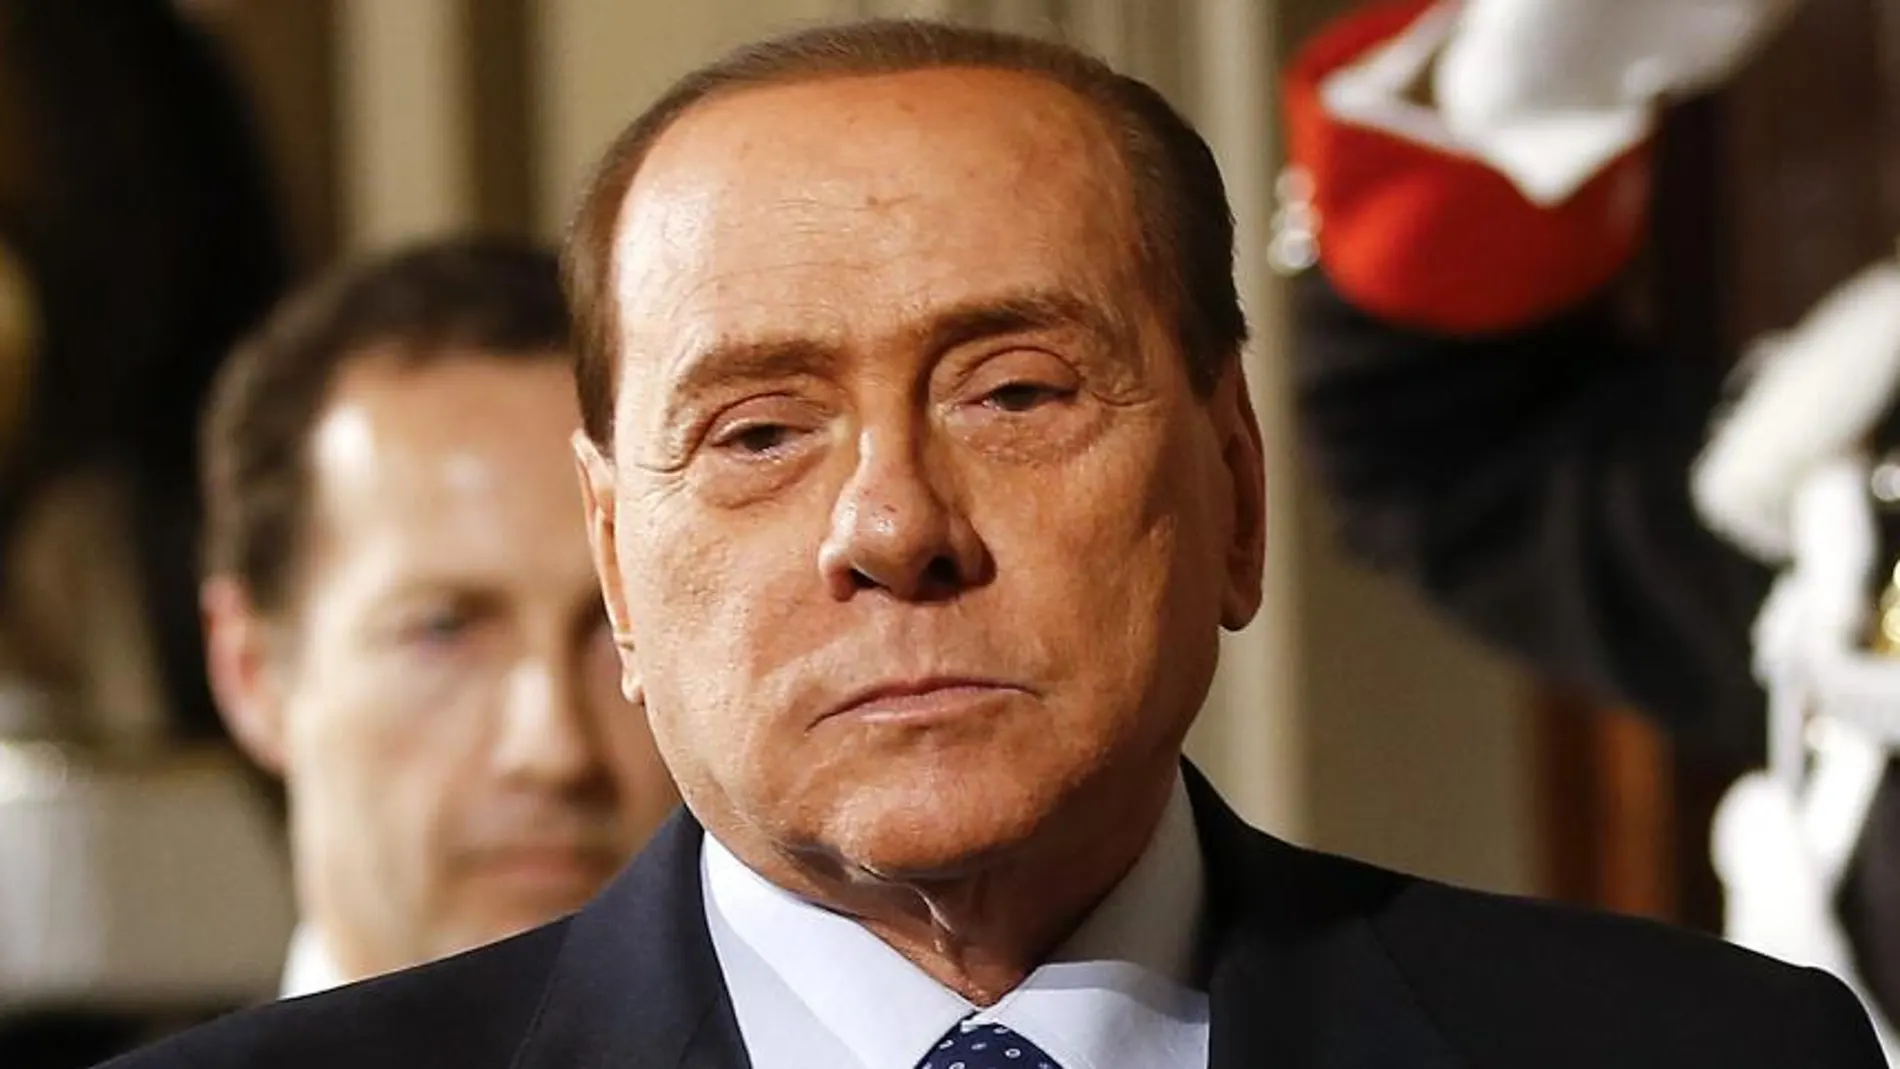 El exmandatario italiano Silvio Berlusconi